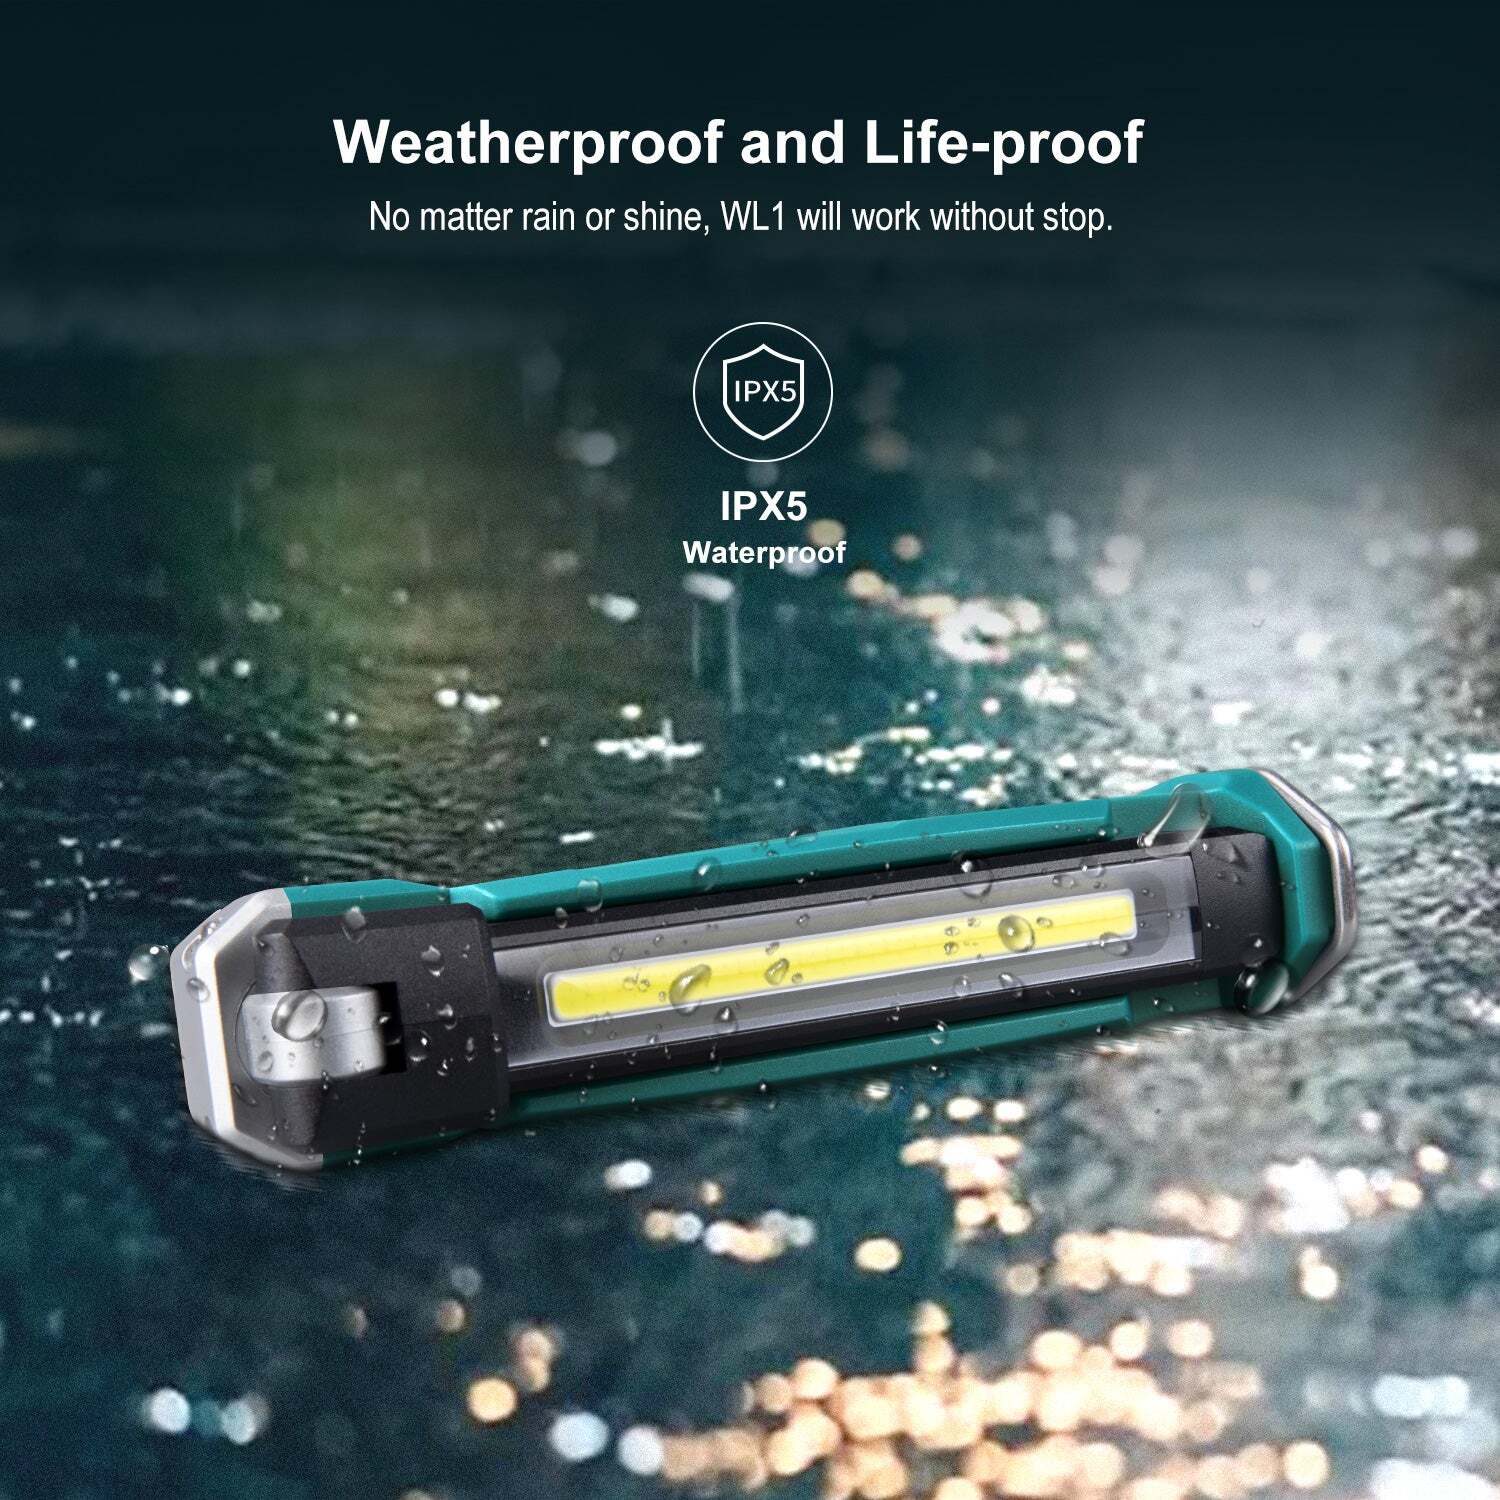 KLARUS WL1 550 Lumens Handheld Buckle Magneto High-light USB Charging Floodlight Camp Light Working Light